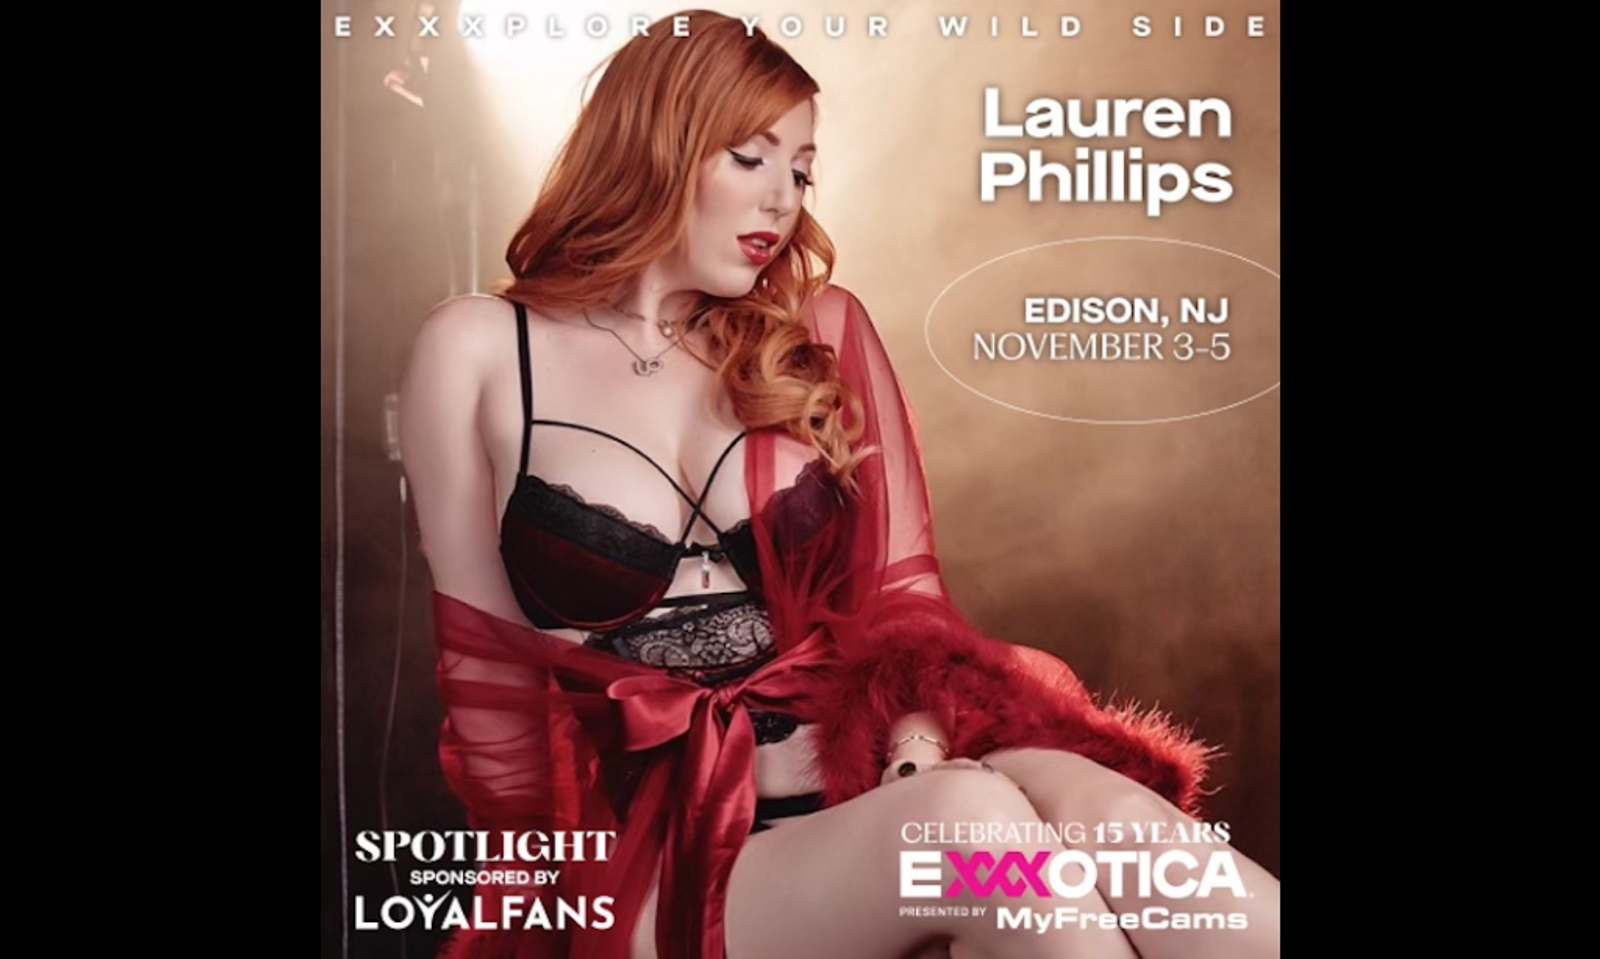 Lauren Phillips Set to Sign at Exxxotica New Jersey This Weekend